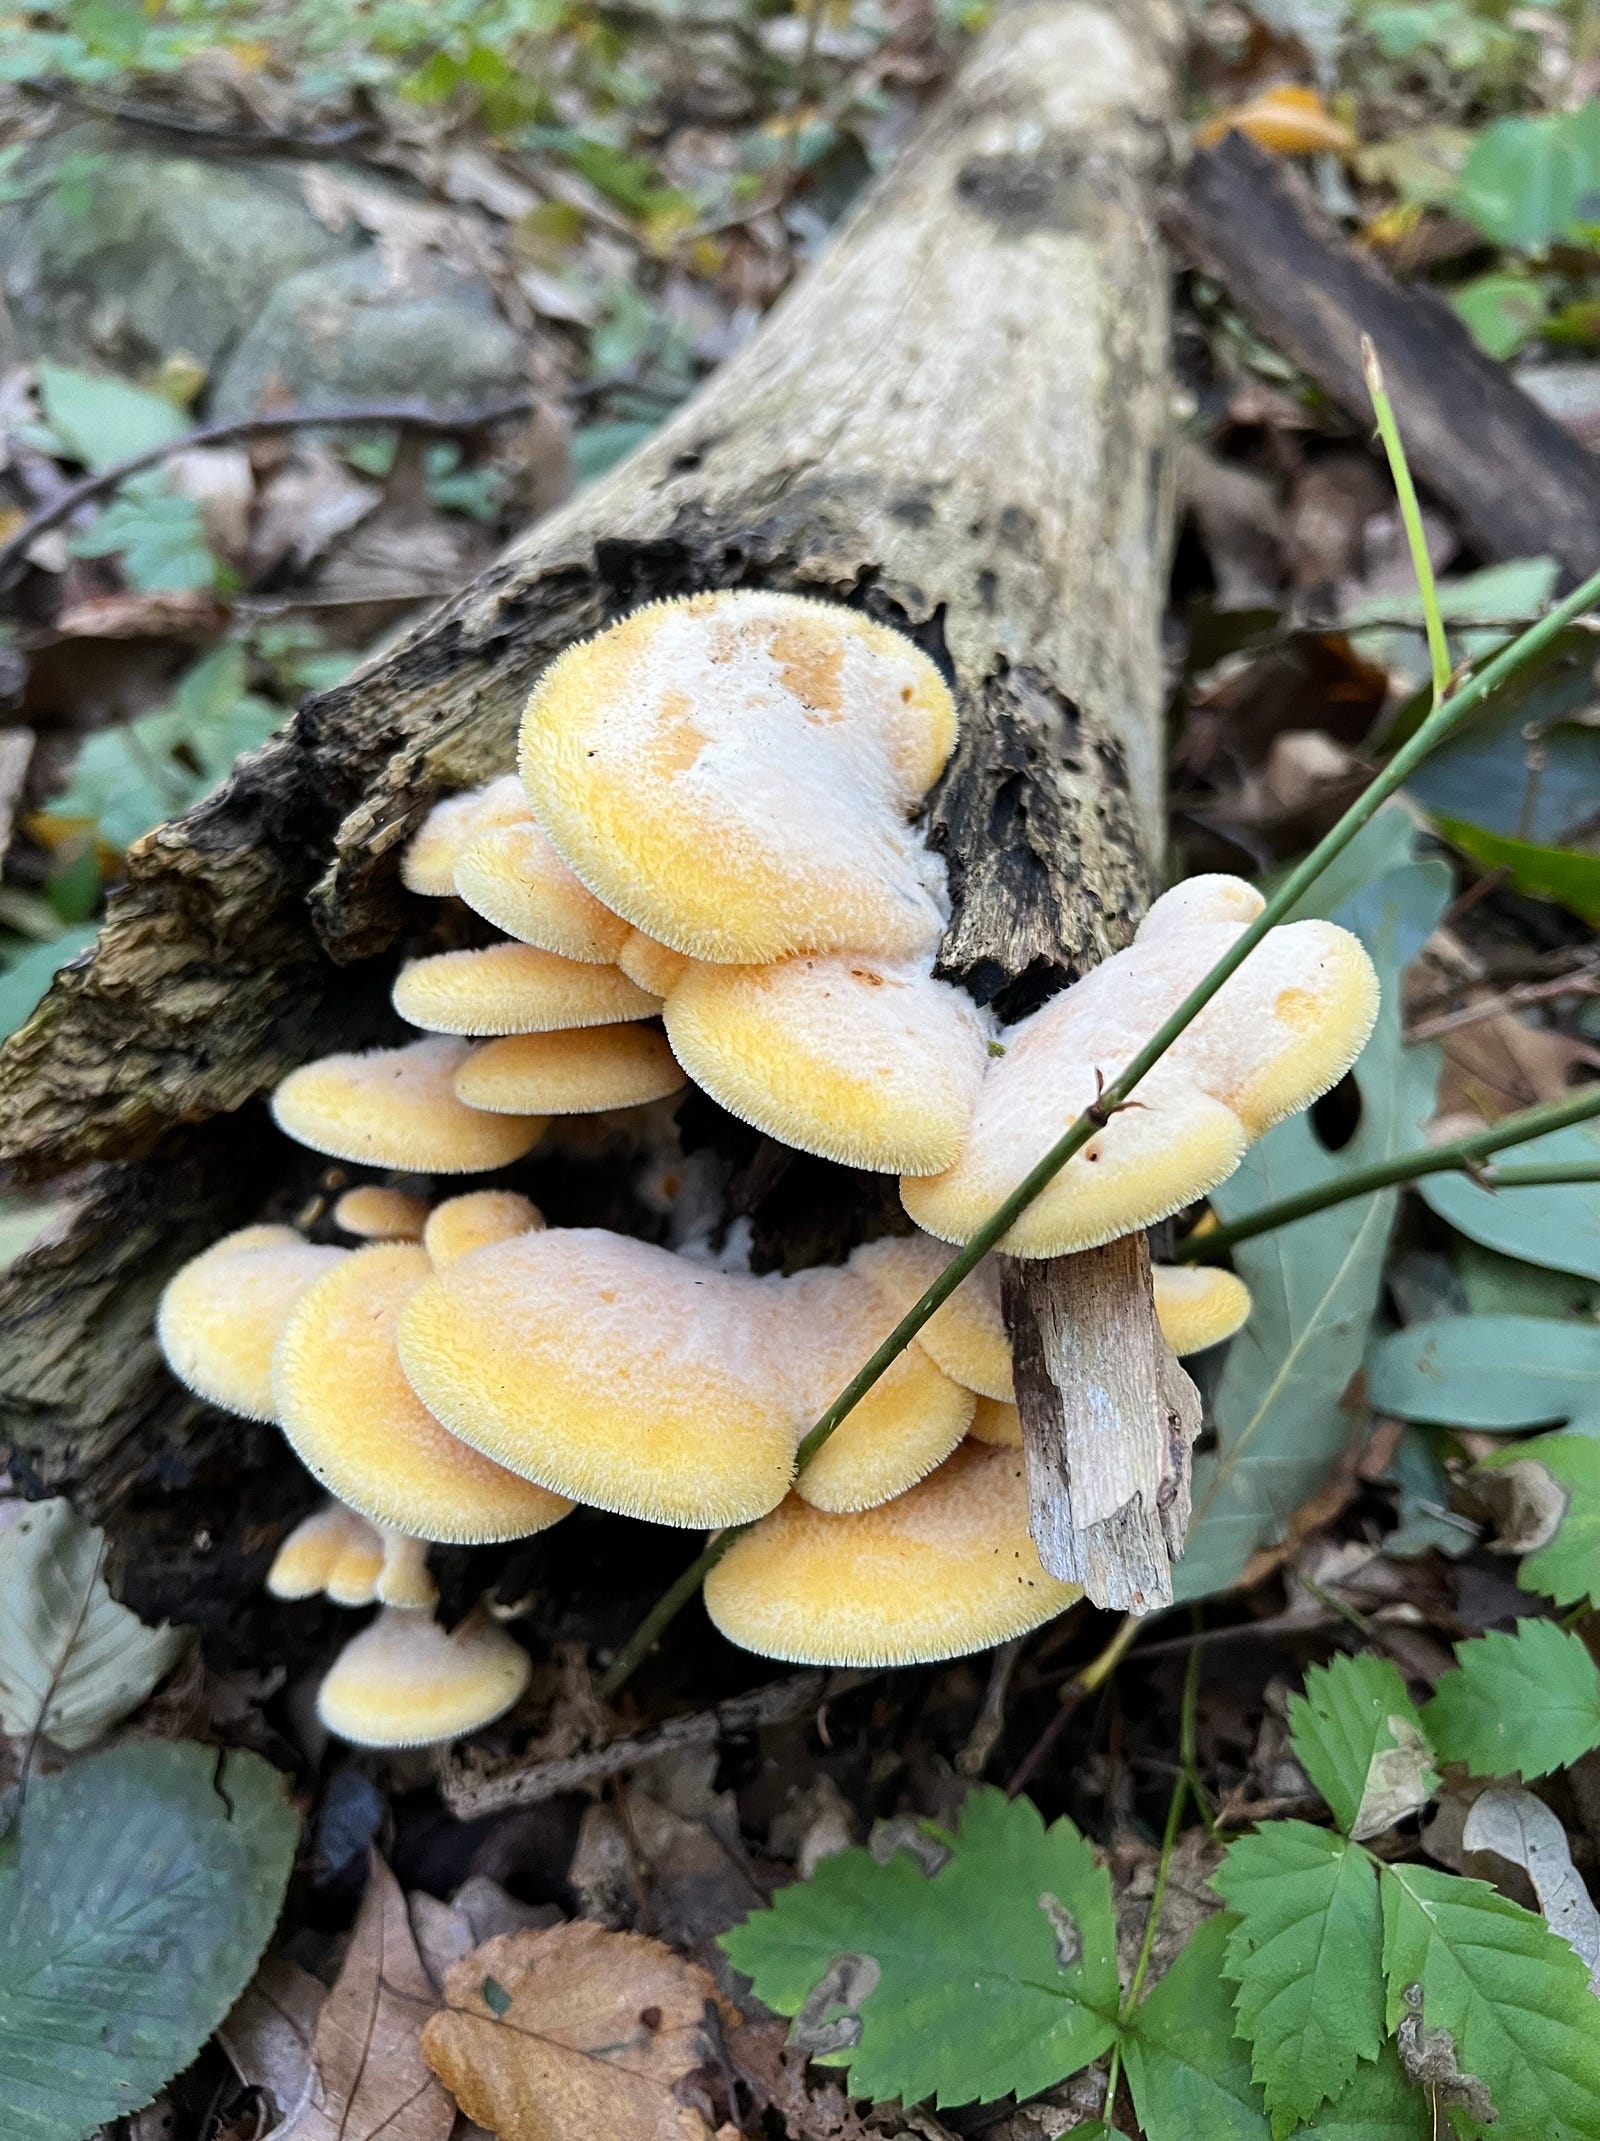 Photo of mushrooms in the Merritt Family Forest, Mystic, CT